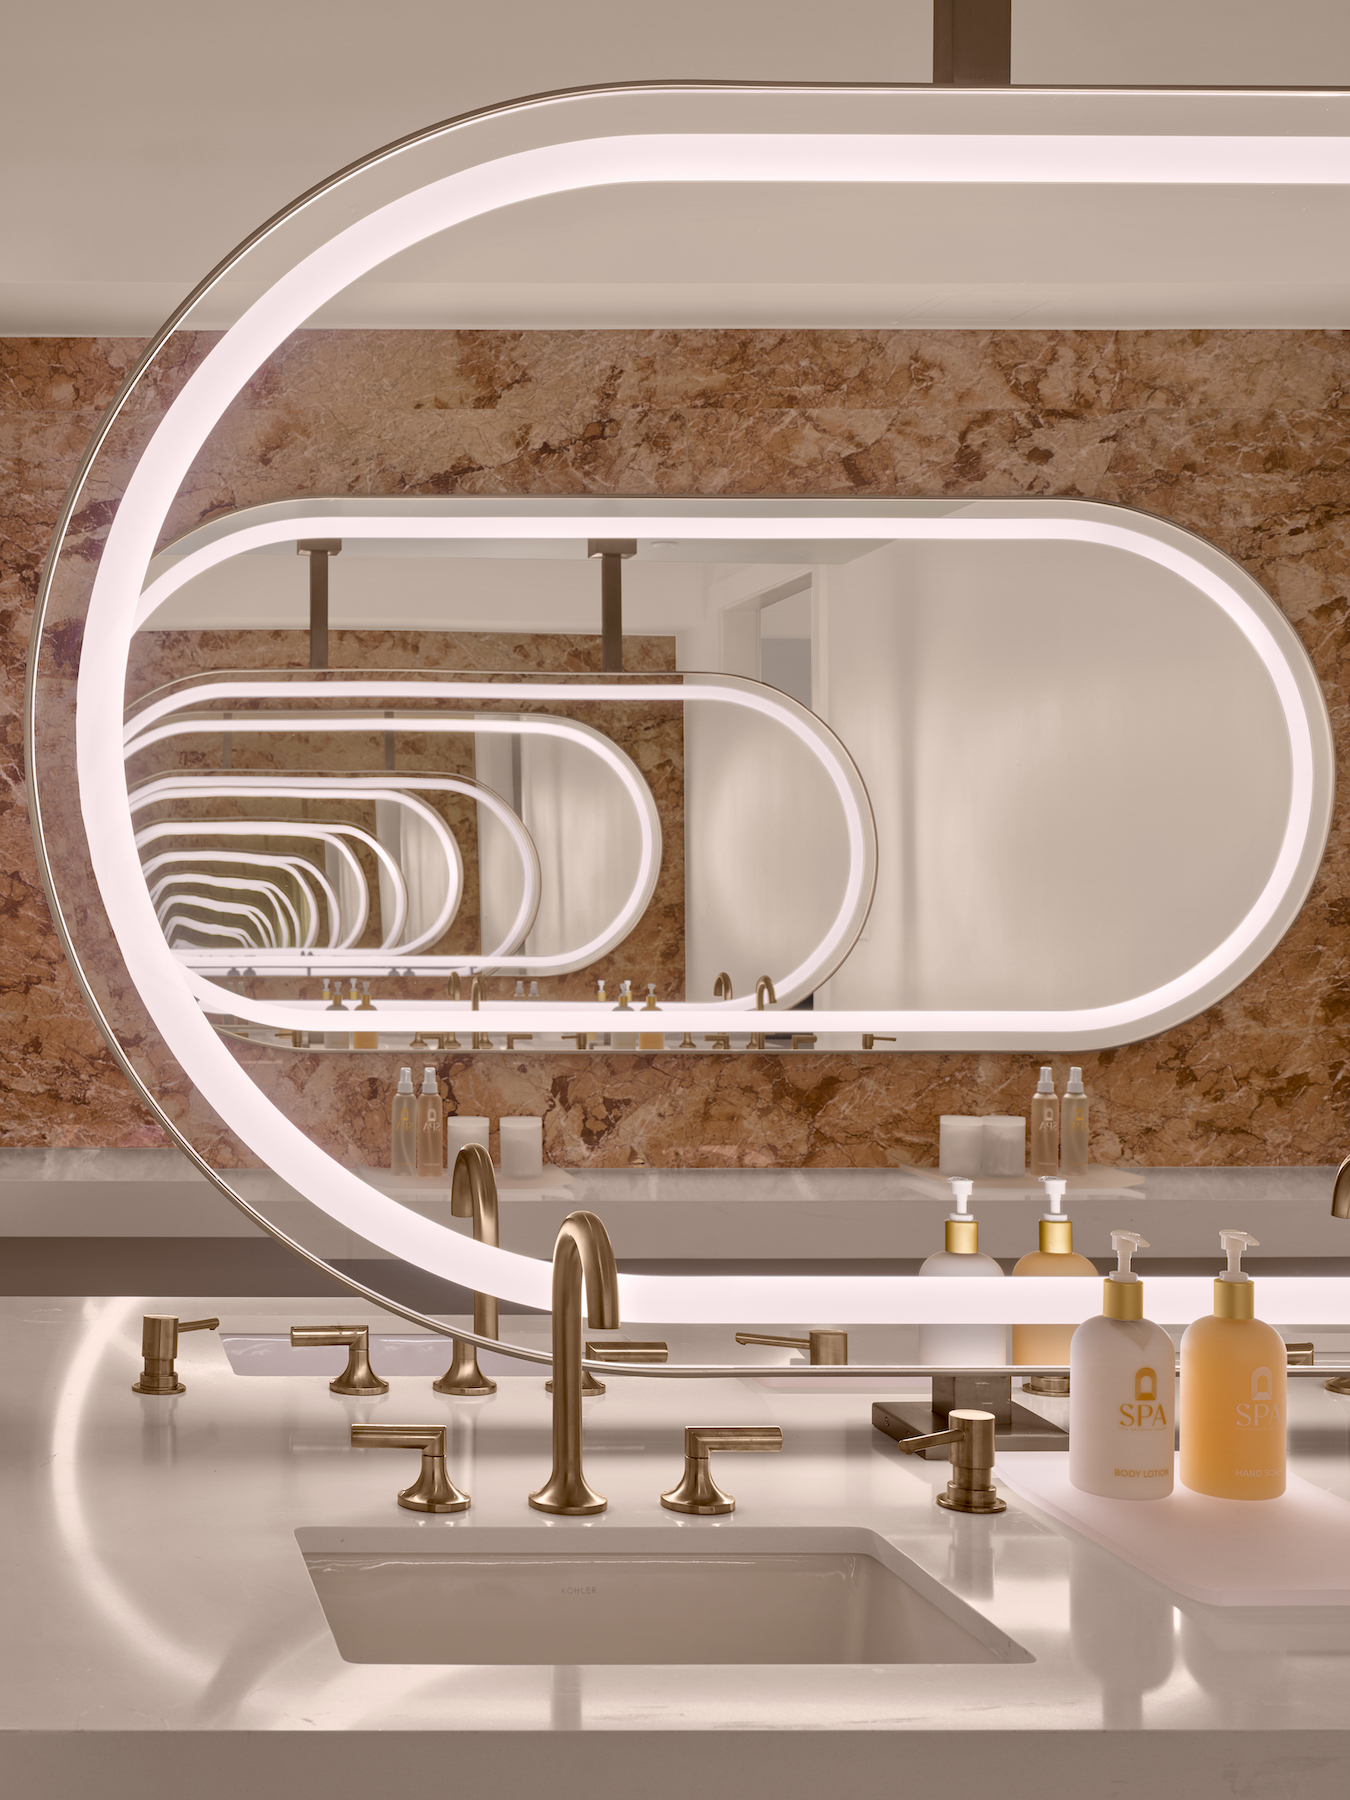 Bathroom of Venus Williams firm V Starr-designed spa at PGA National Resort in Florida – Effect Magazine - Effetto